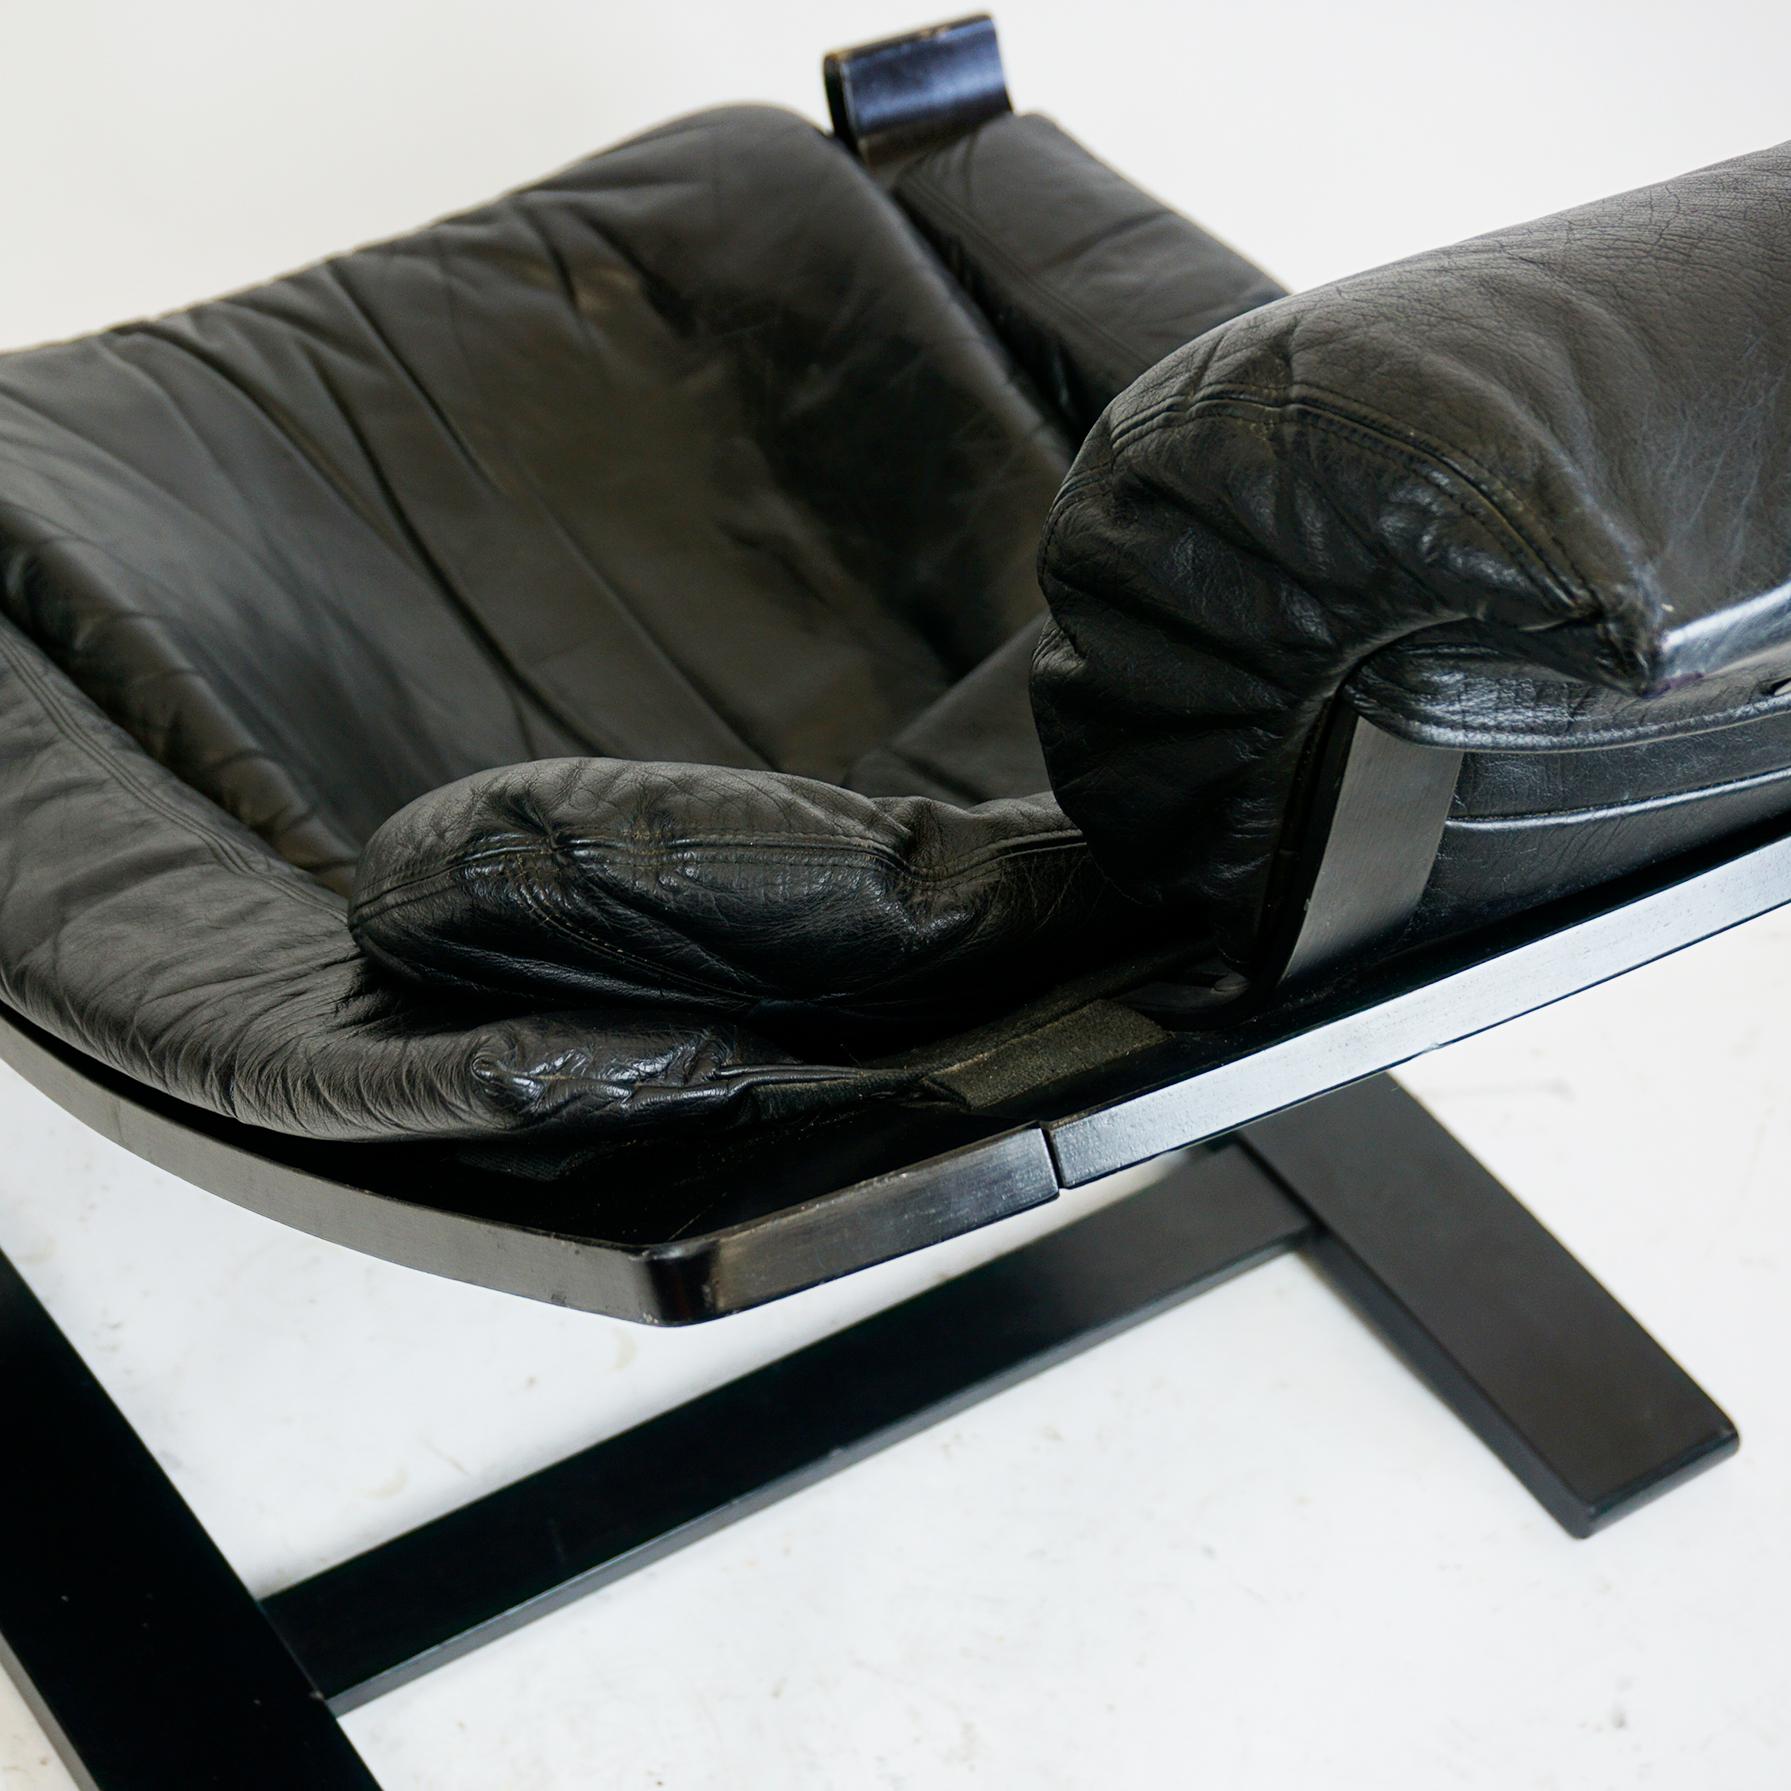 Scandinavian Black Leather Kroken Lounge Chair by Ake Fribytter for Nelo Sweden 1